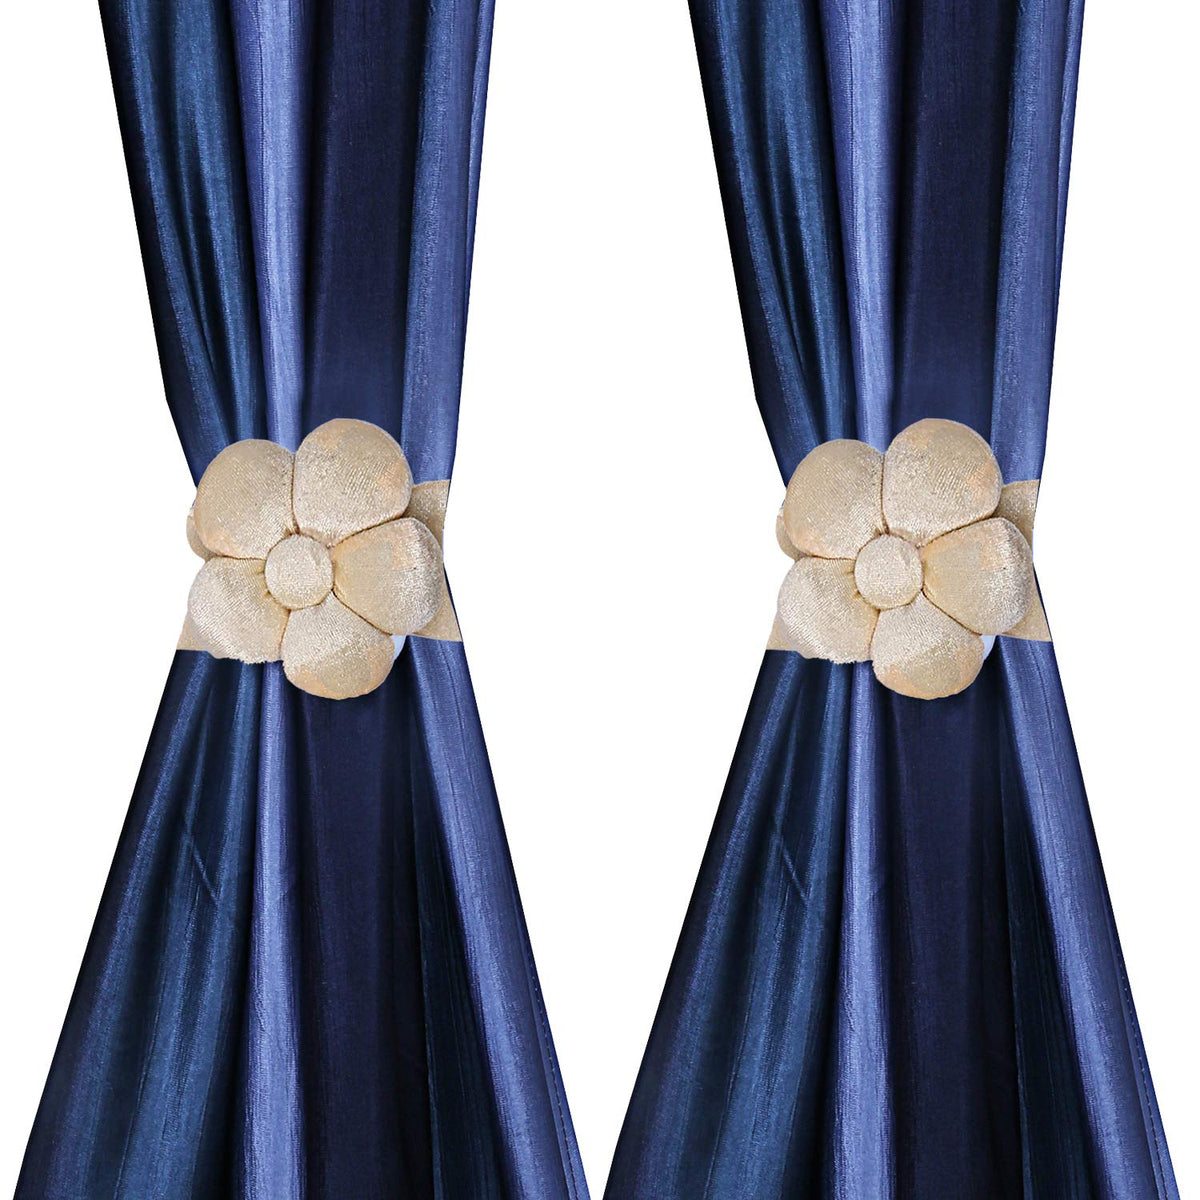 Kuber Industries Velvet 2 Pieces Curtain Tie Back Tassel Set (Cream) - CTKTC22169, Standard